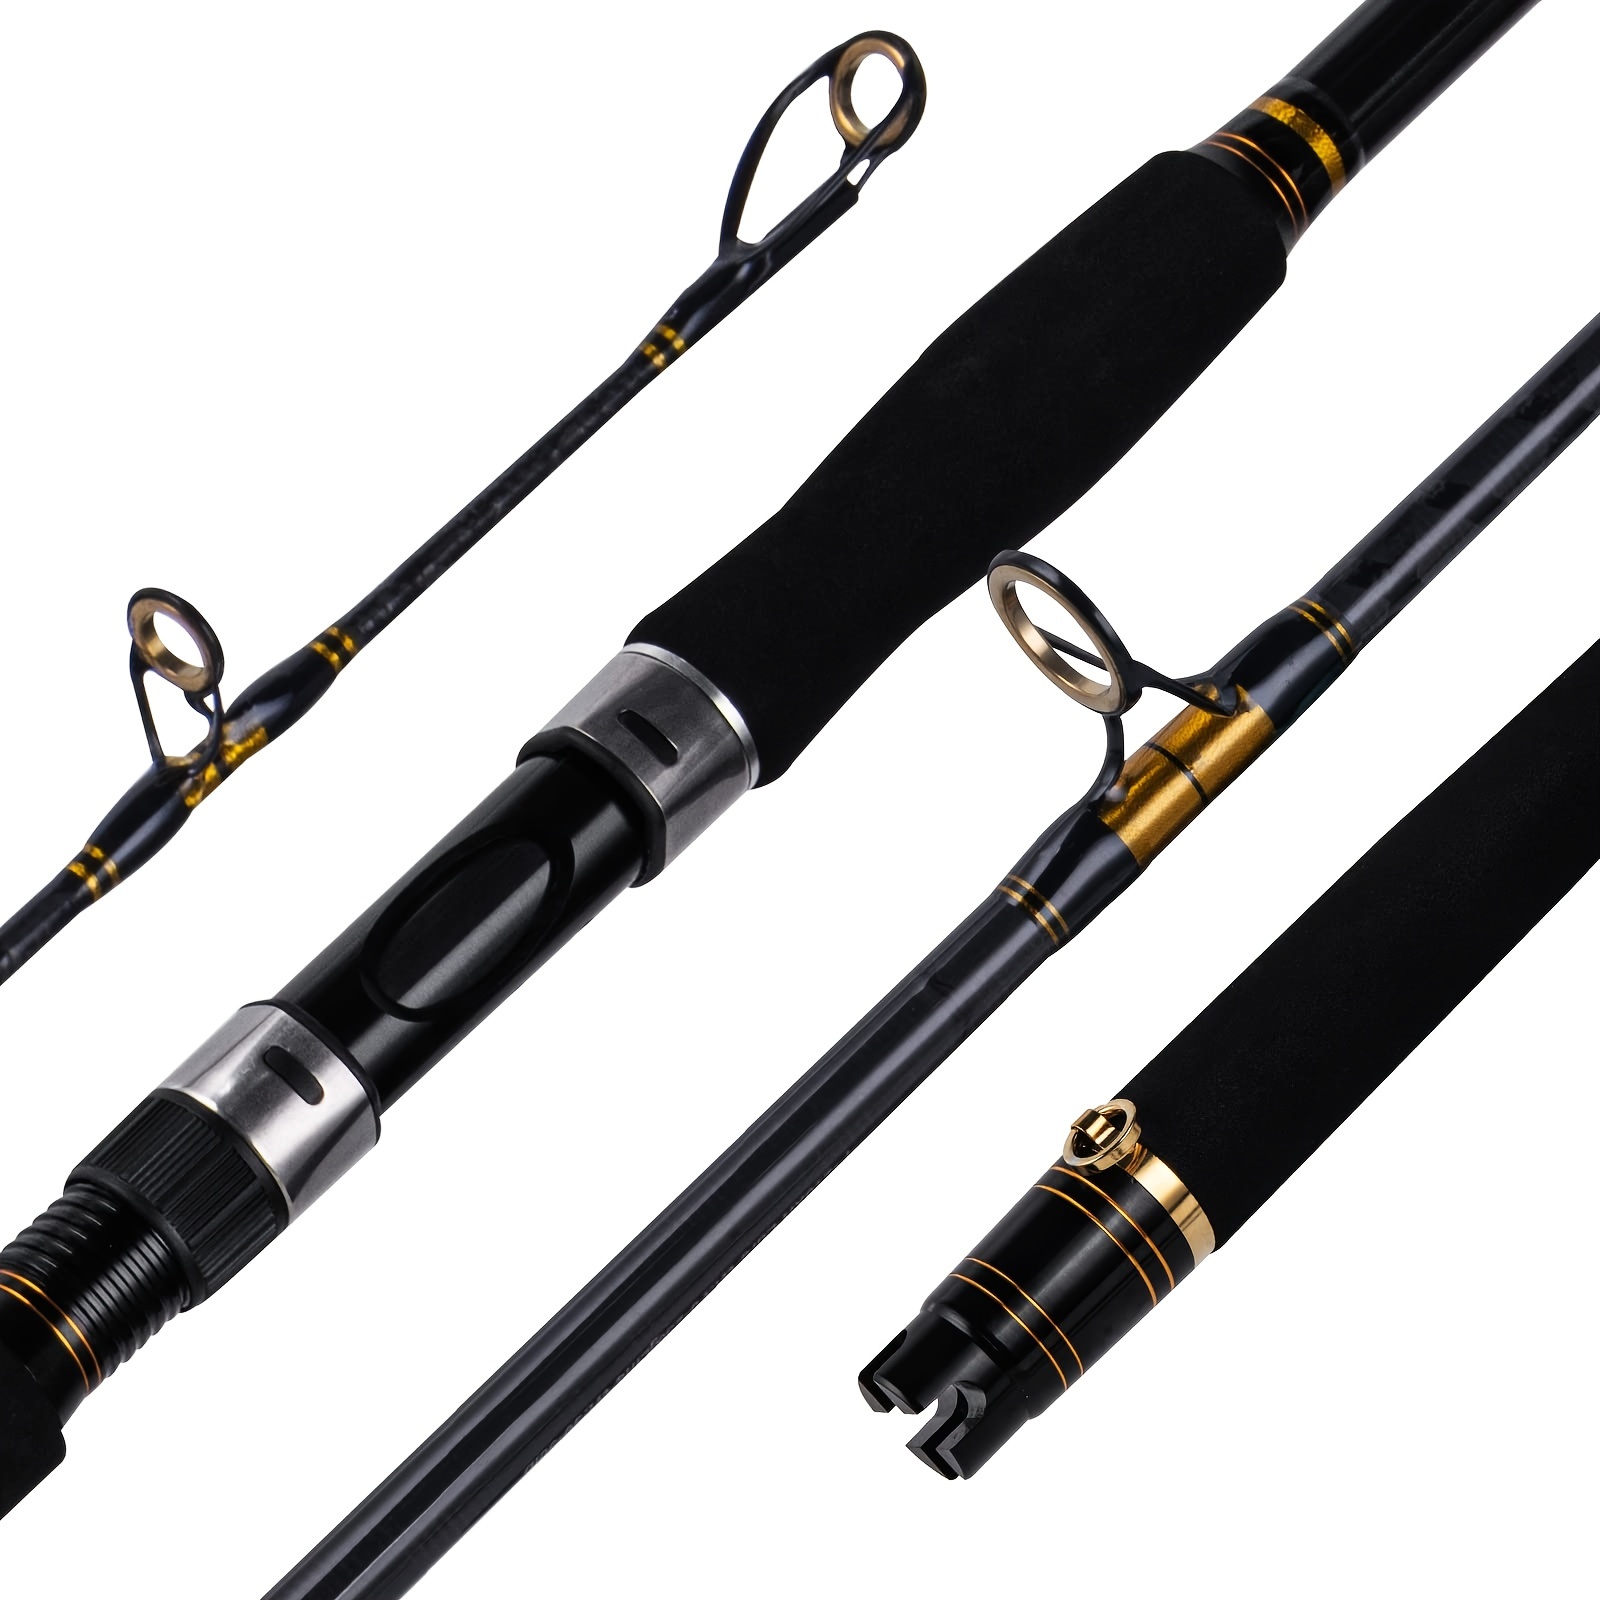 Goture Heavy Duty Spinning Fishing Rod Anti winding Design - Temu